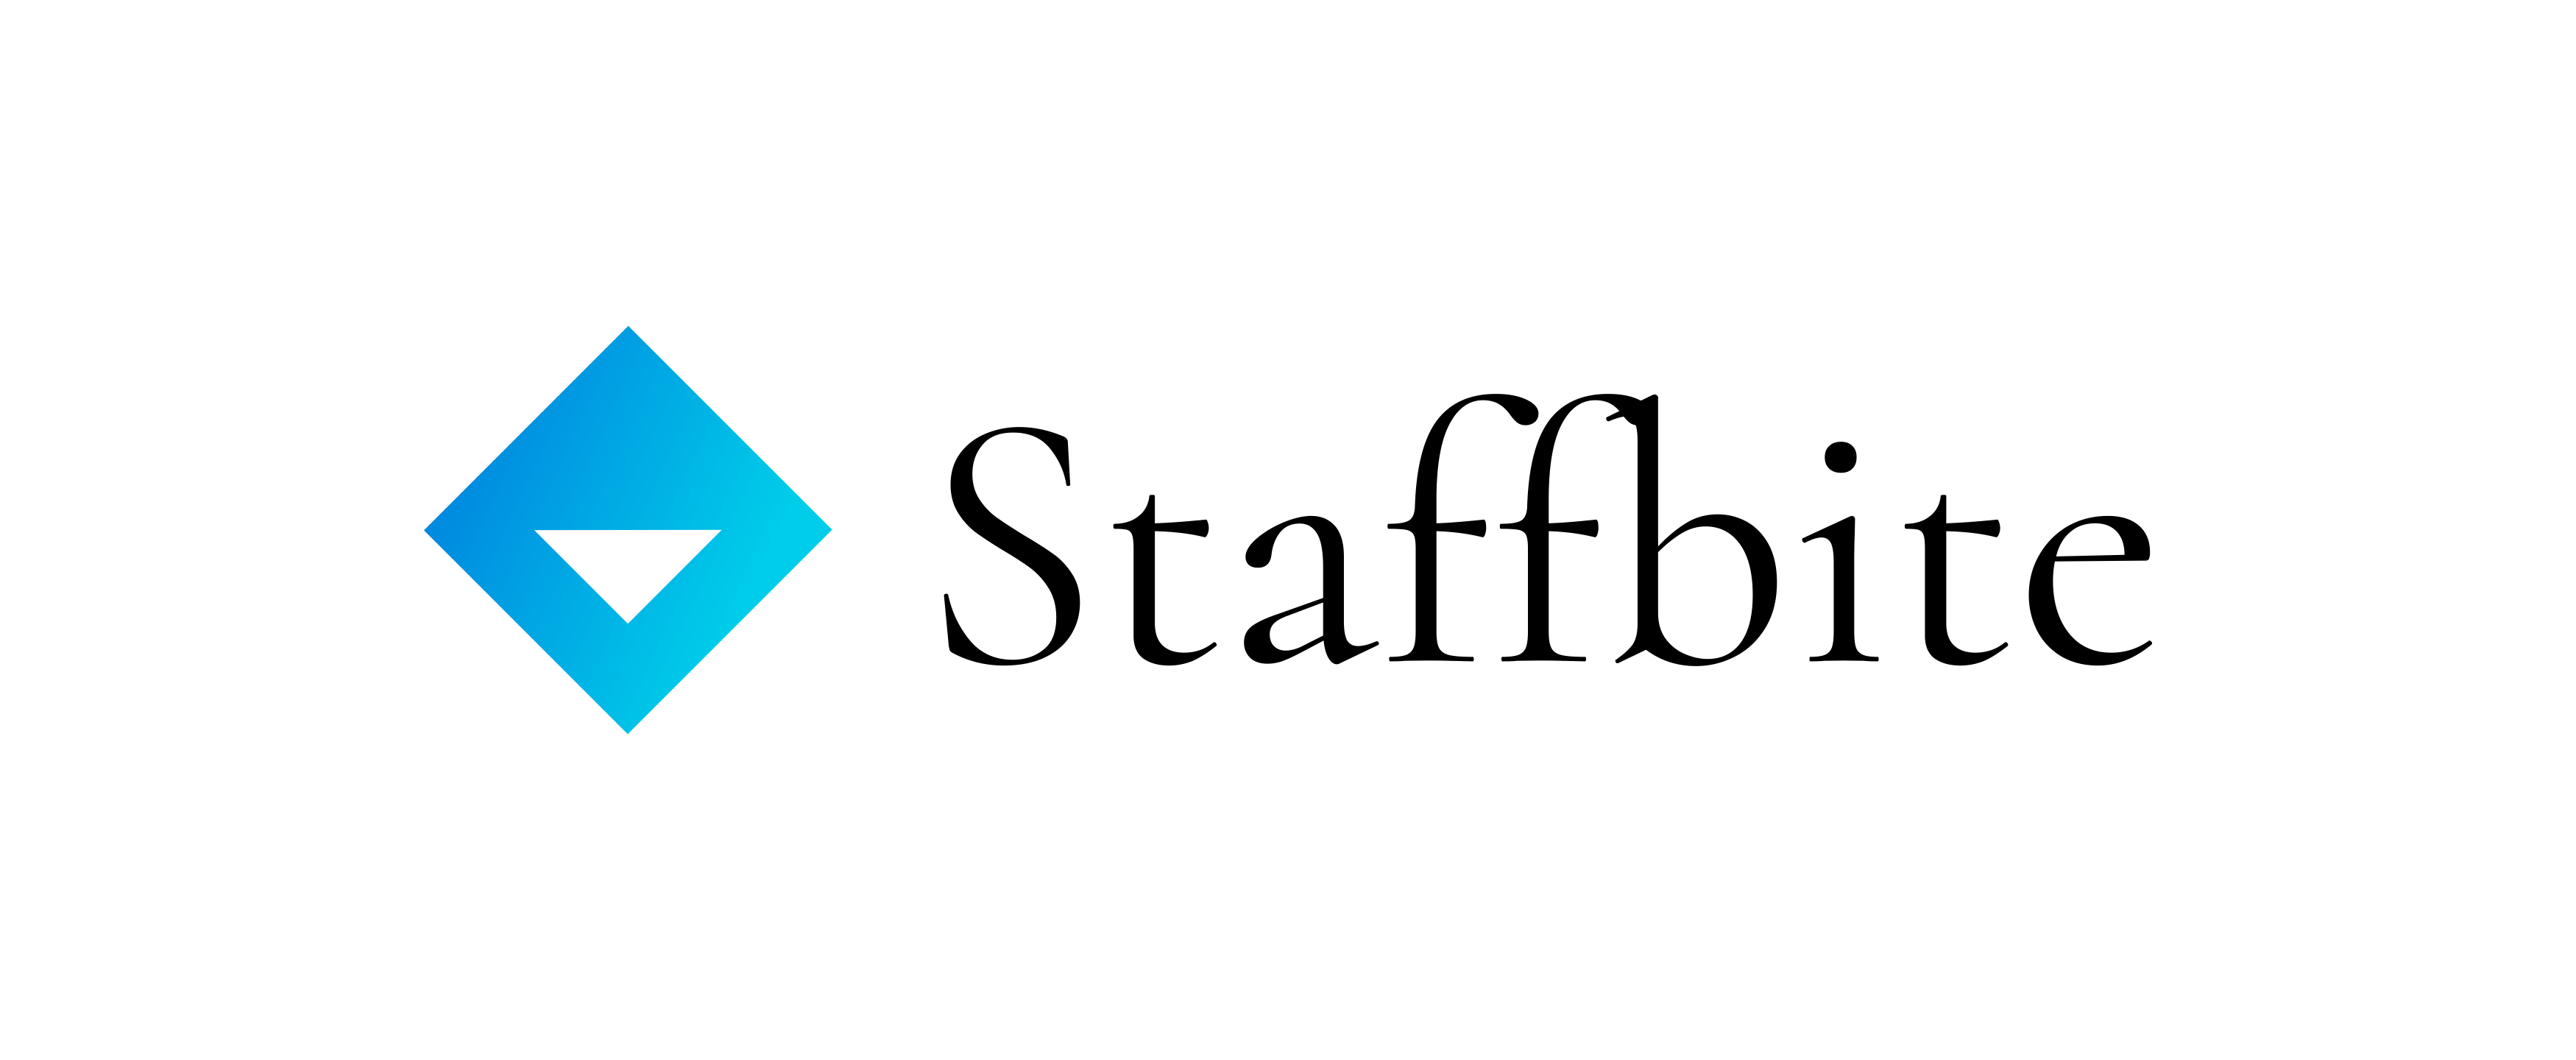 Blue logo and lettering Staffbite